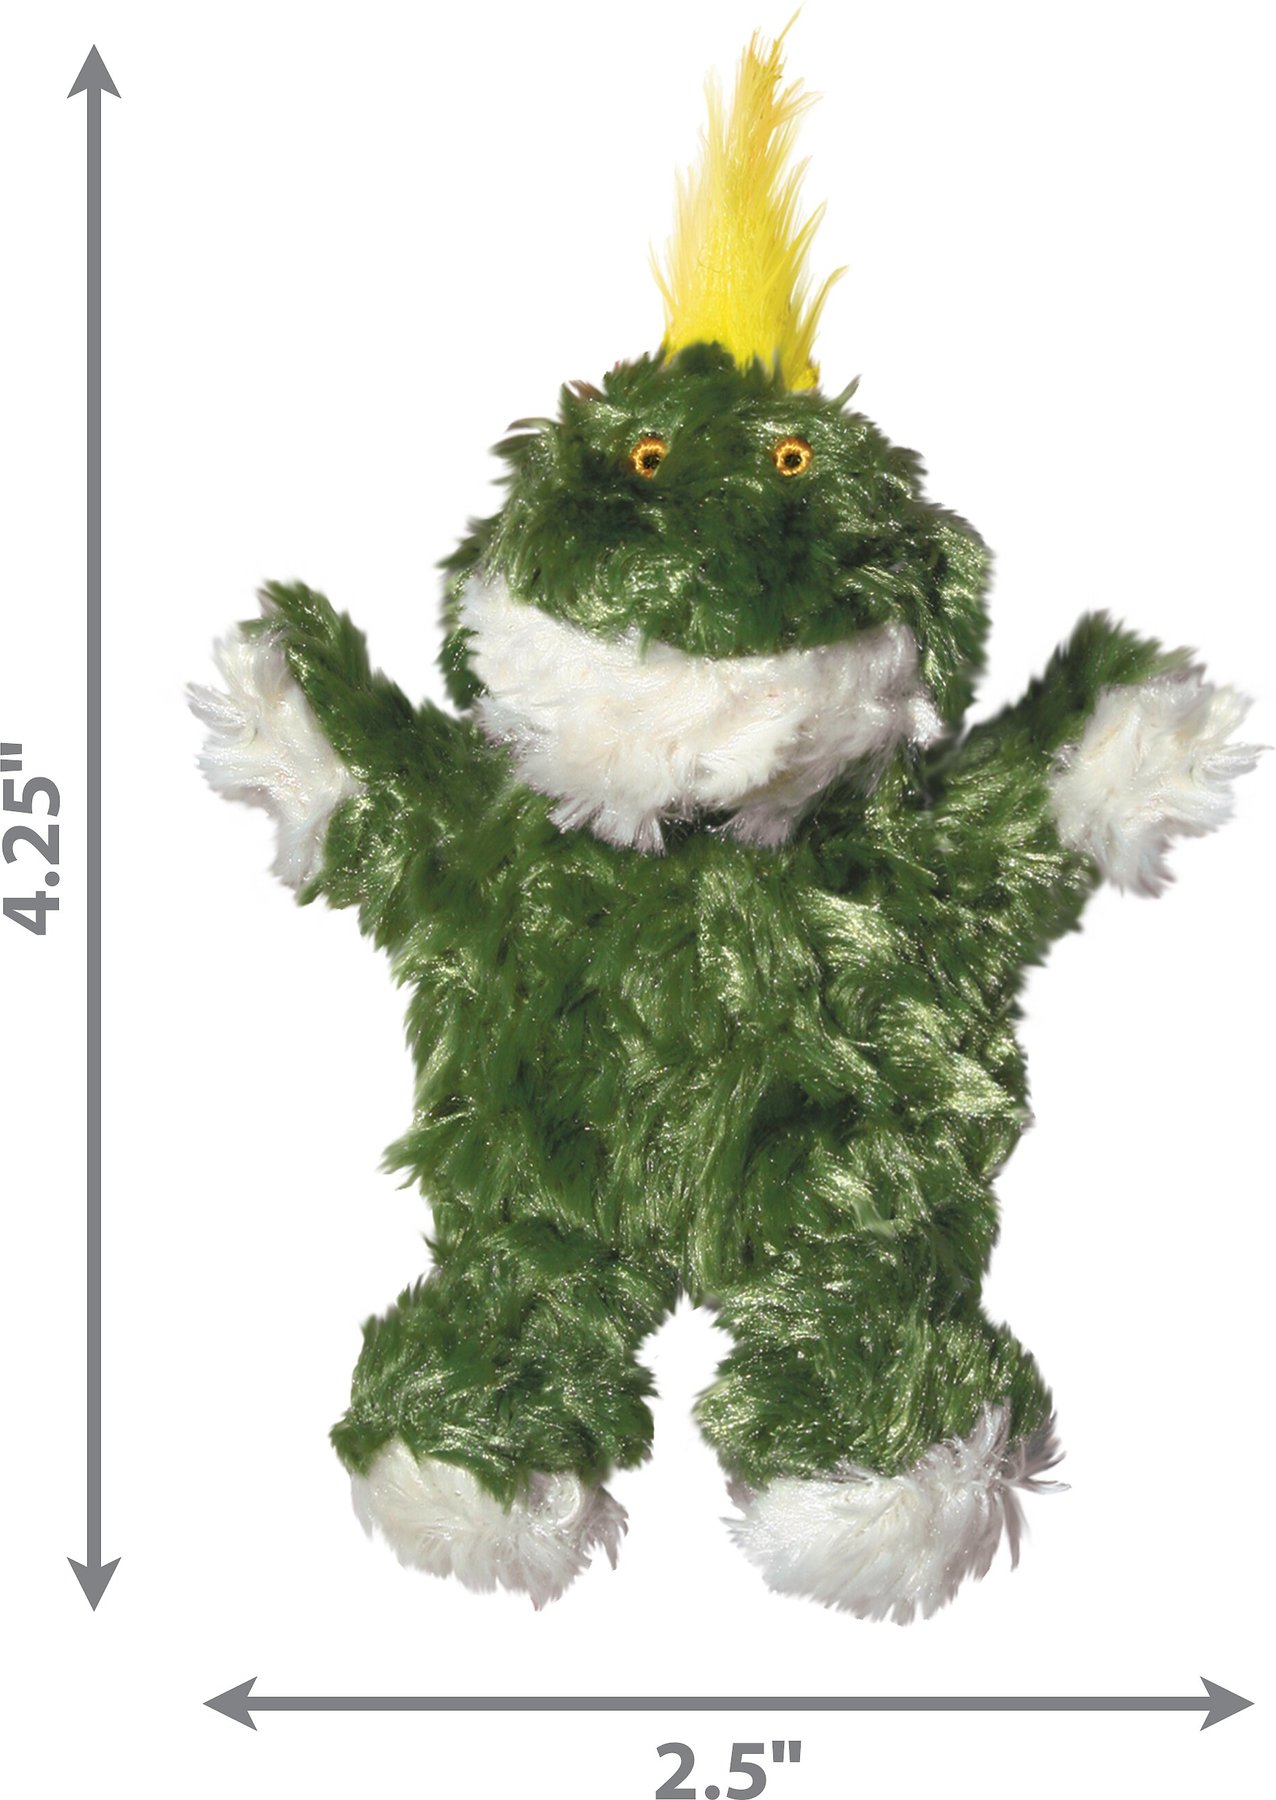 KONG Finn Frog Dog Toy